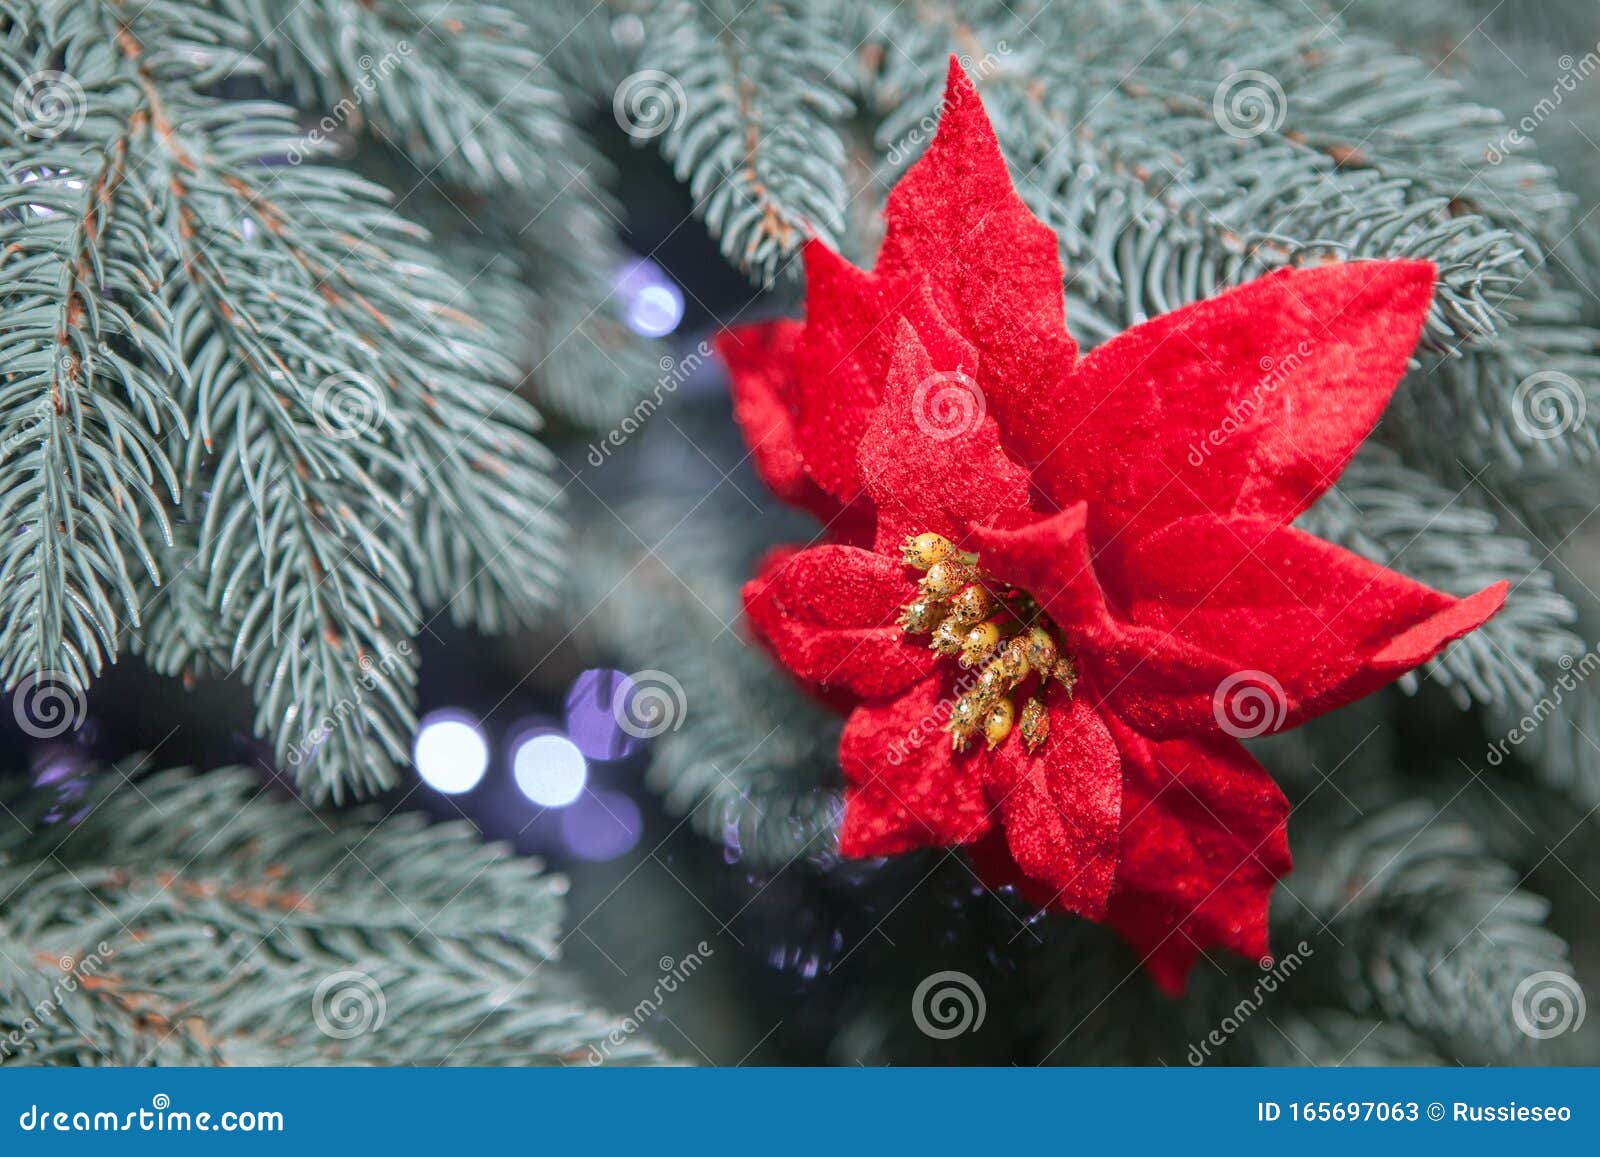 Red Christmas flower stock image. Image of christmas - 165697063